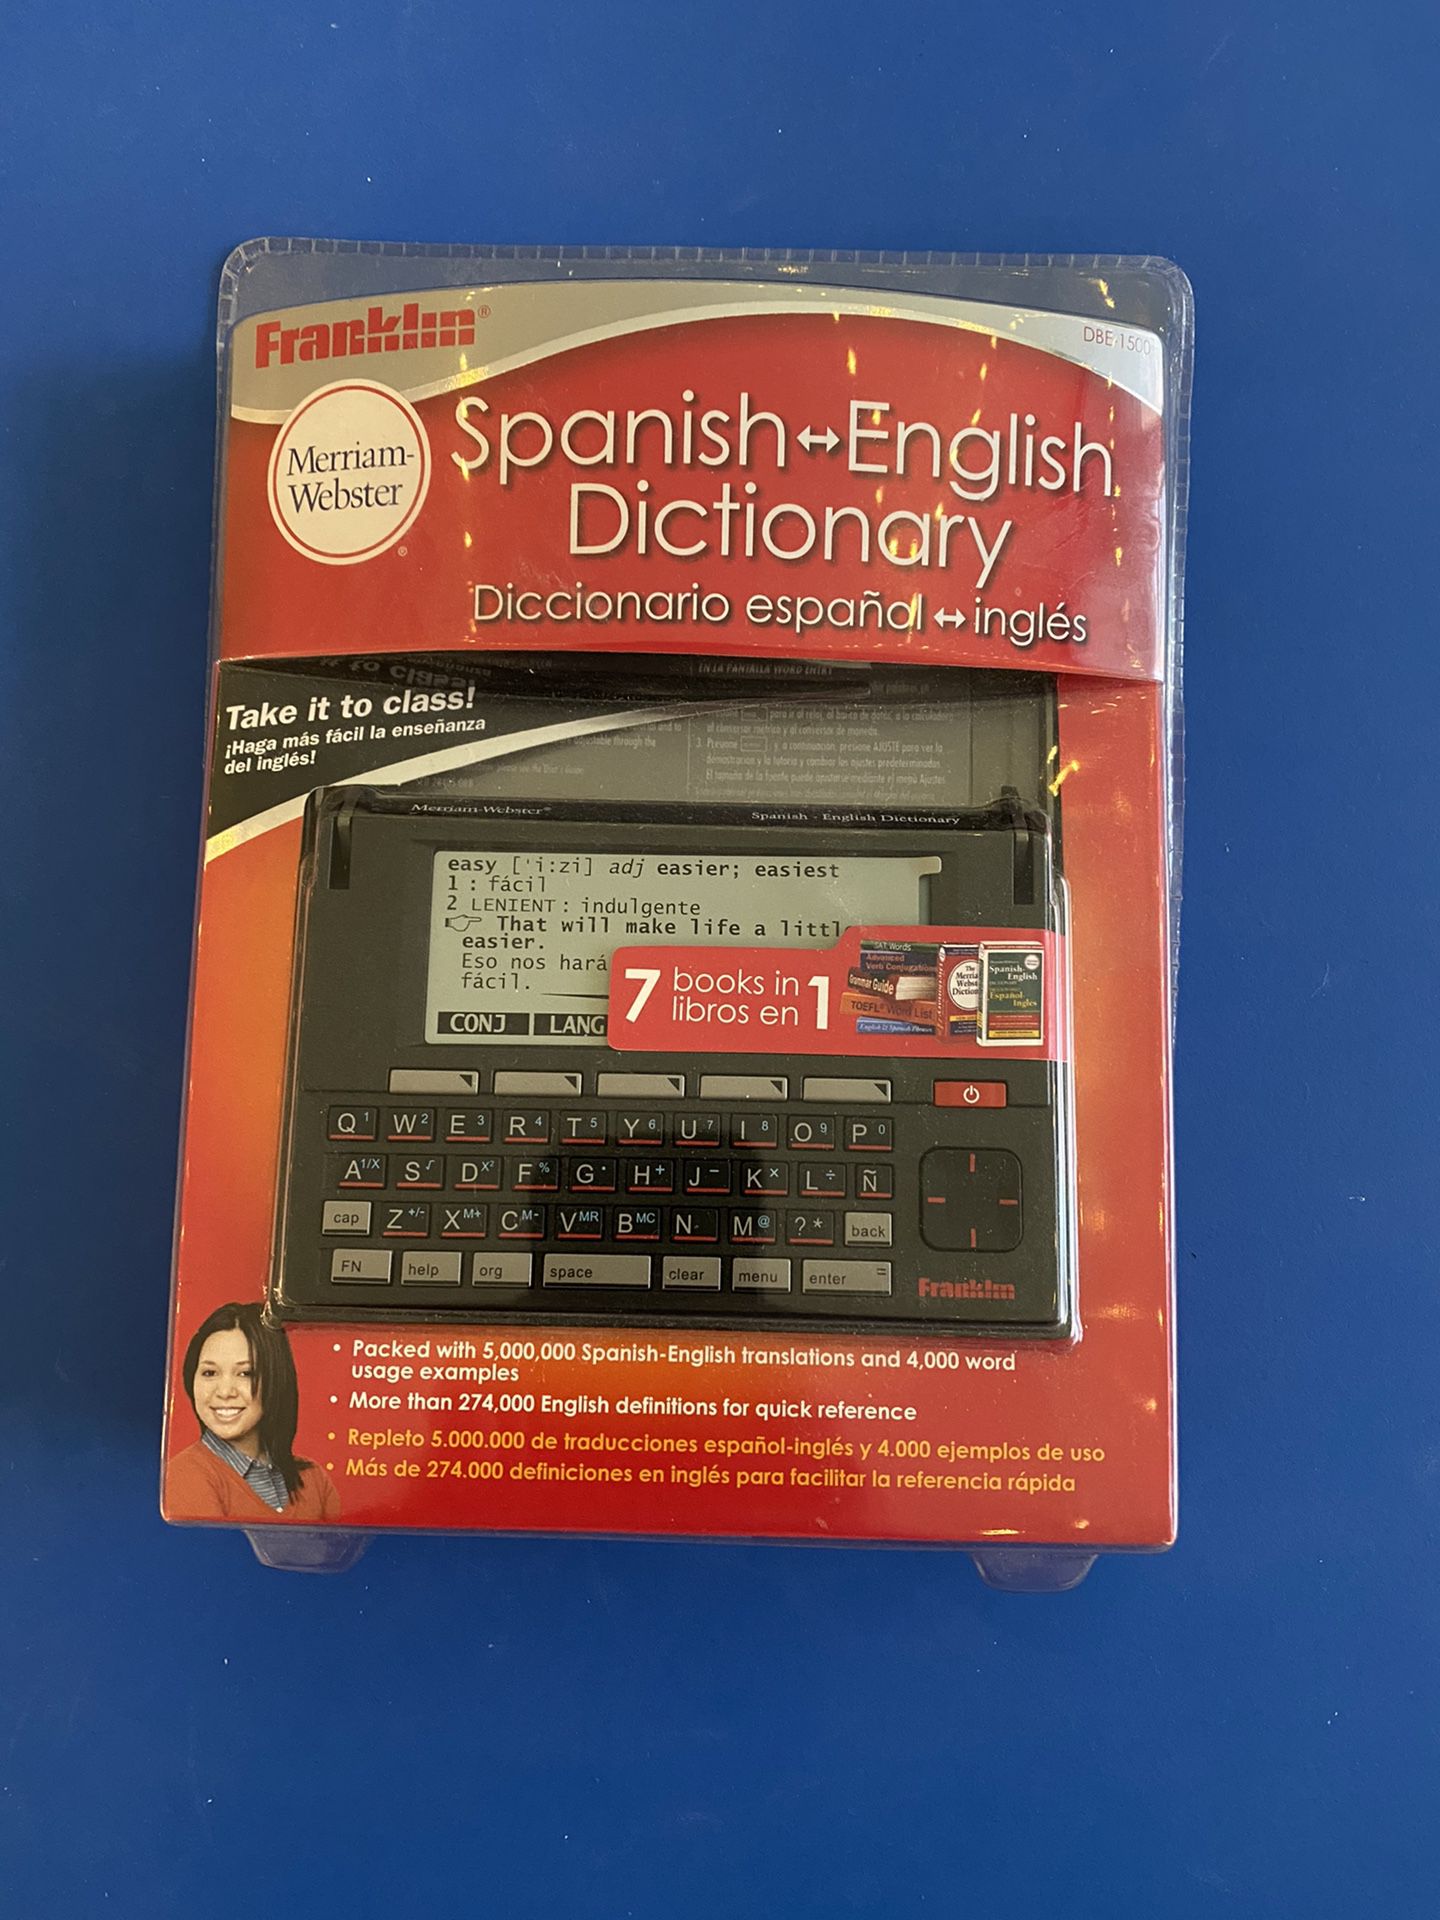 Franklin Spanish-English Dictionary